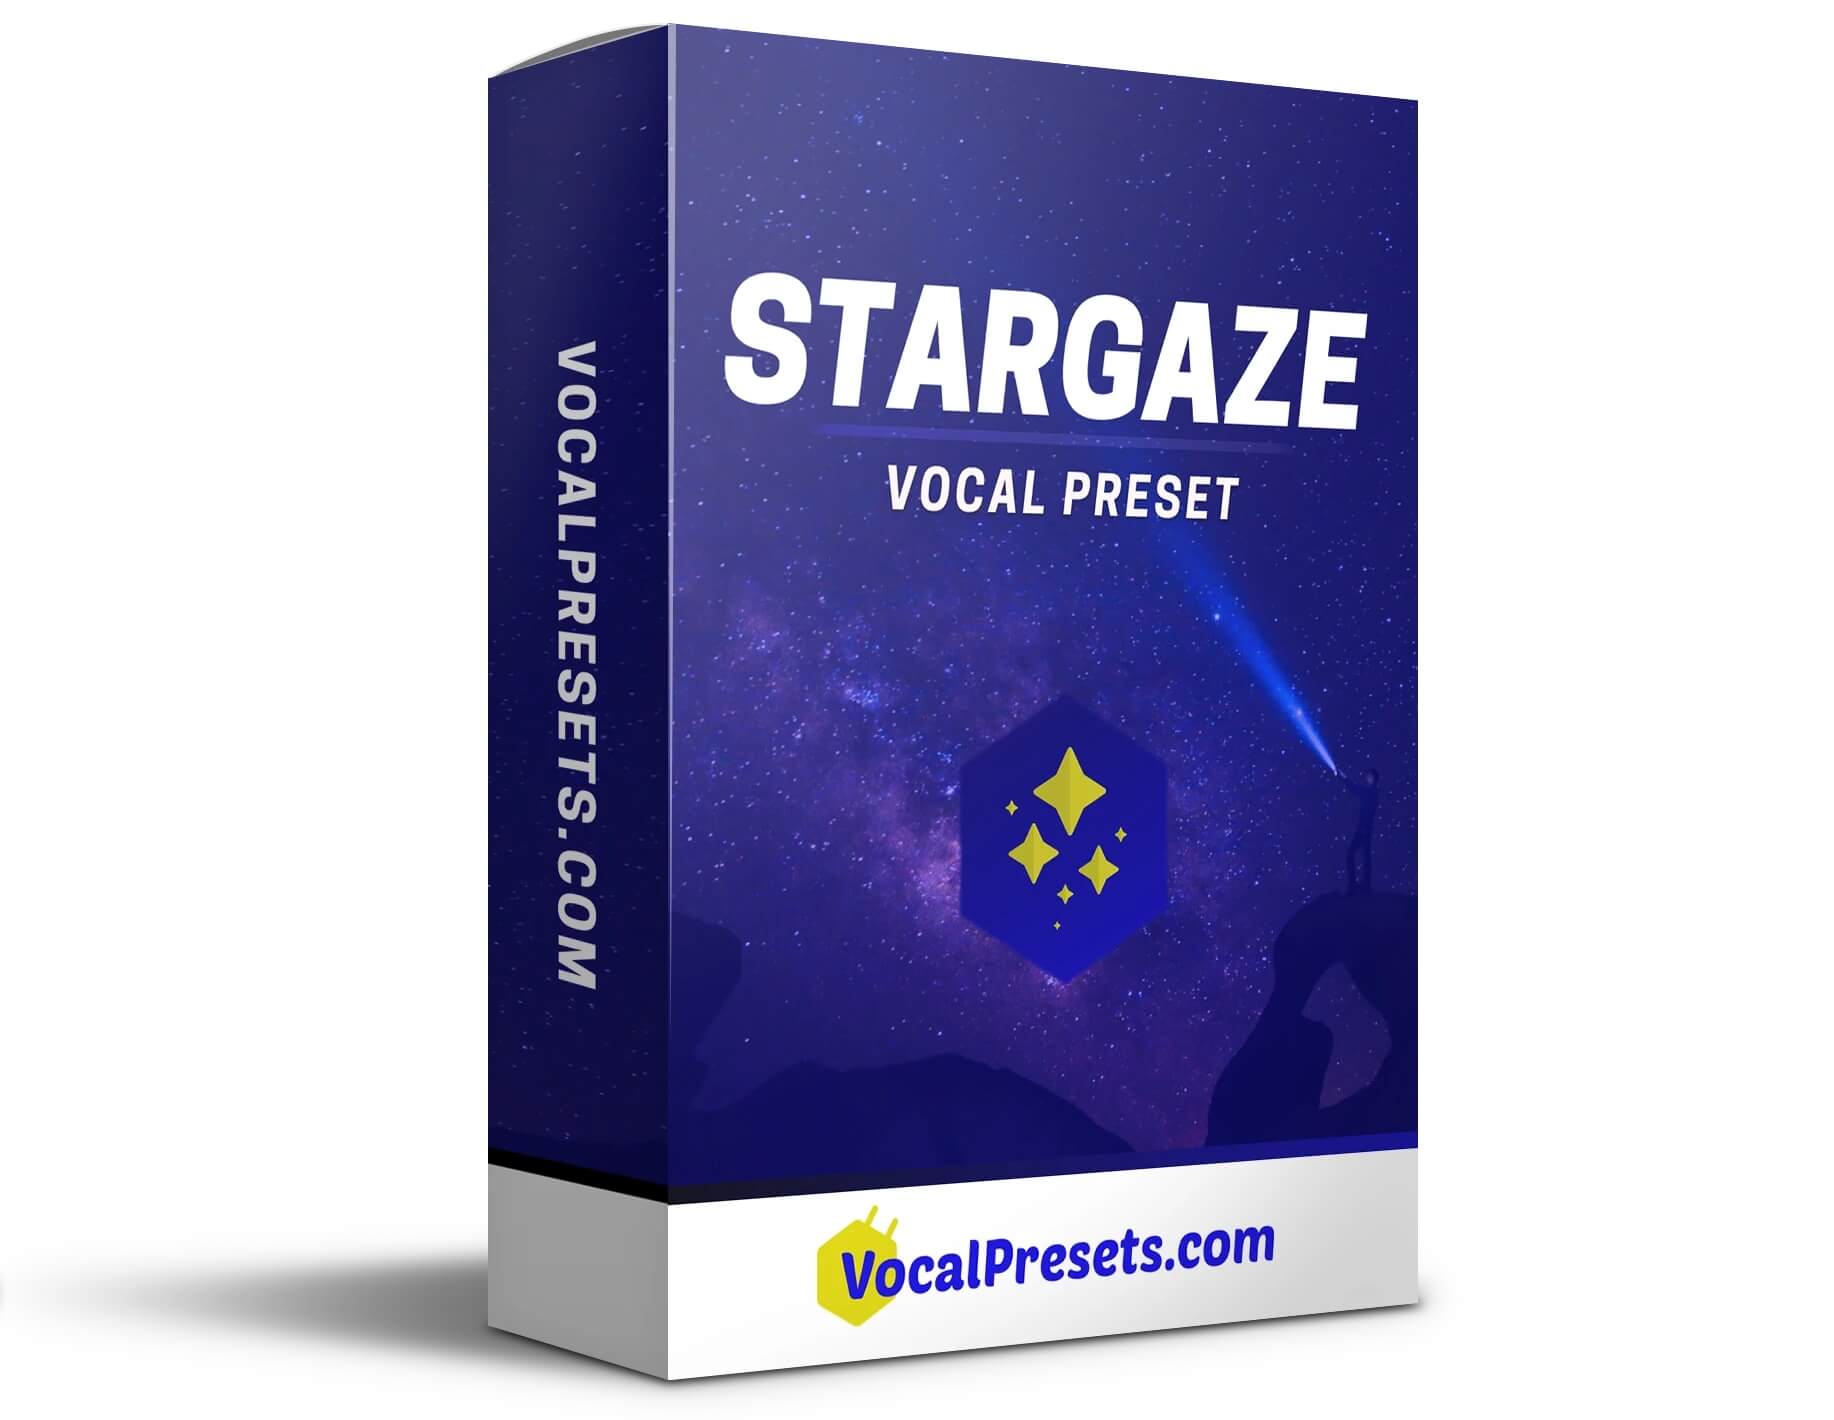 fl studio vocal presets free download